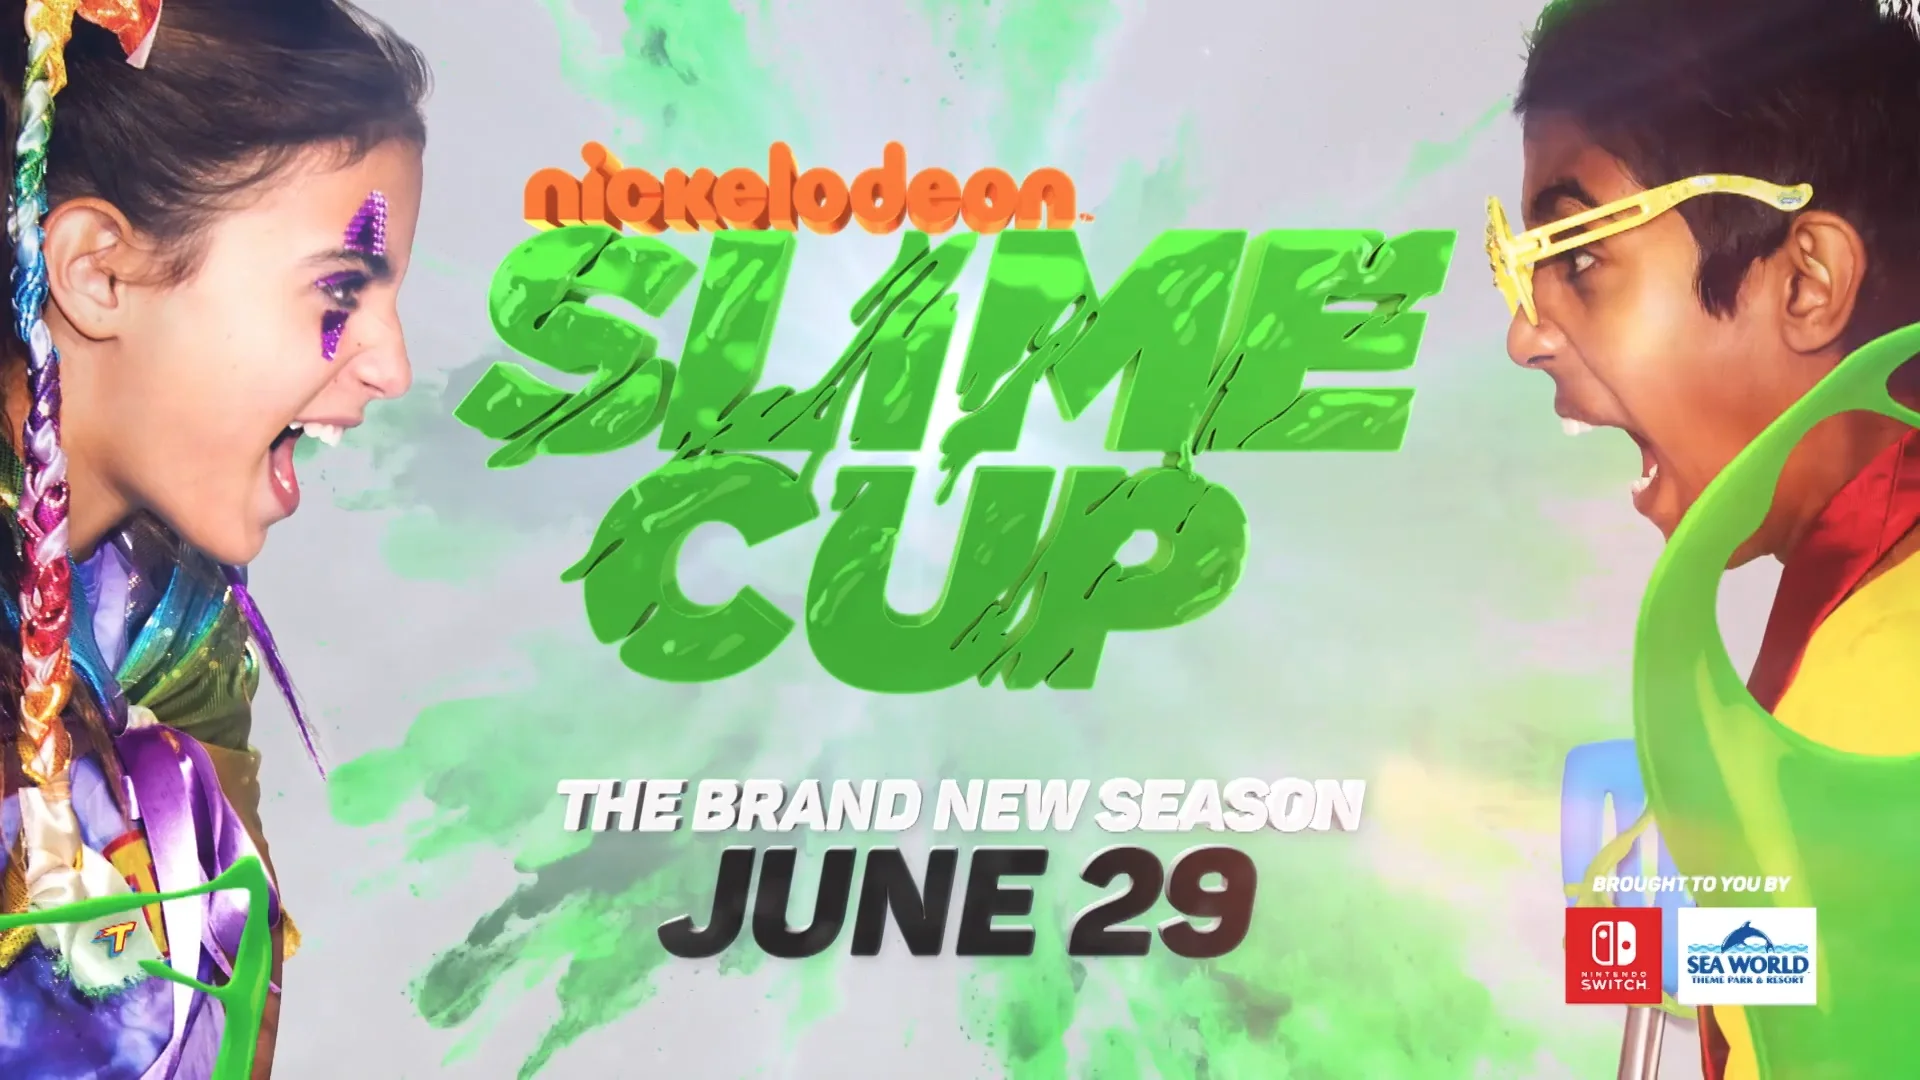 Nickelodeon Slime Cup 2015